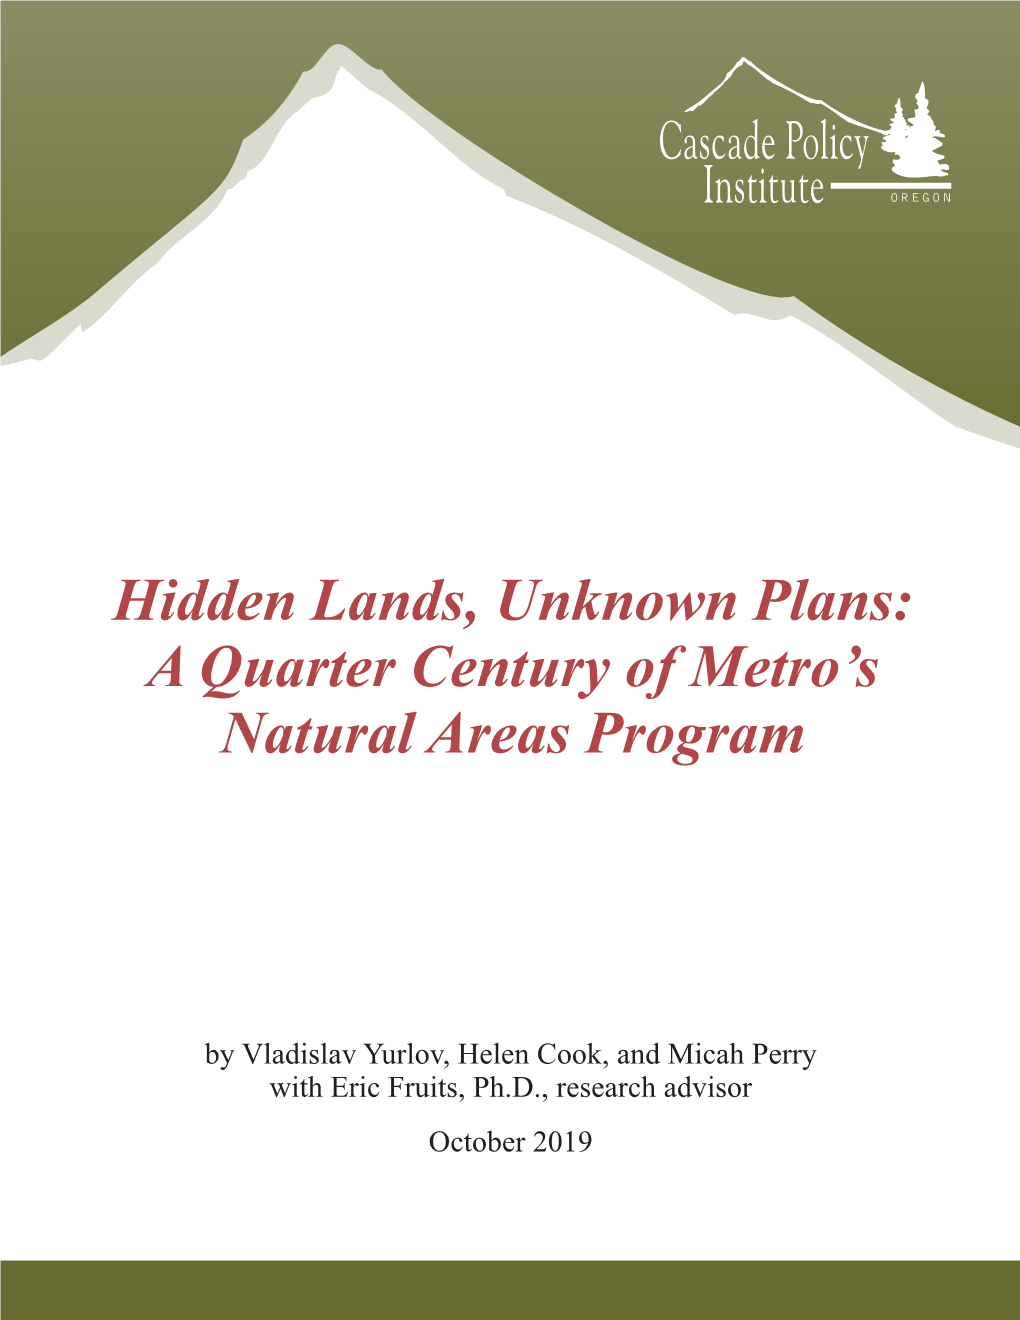 Hidden Lands, Unknown Plans: a Quarter Century of Metro's Natural Areas Program